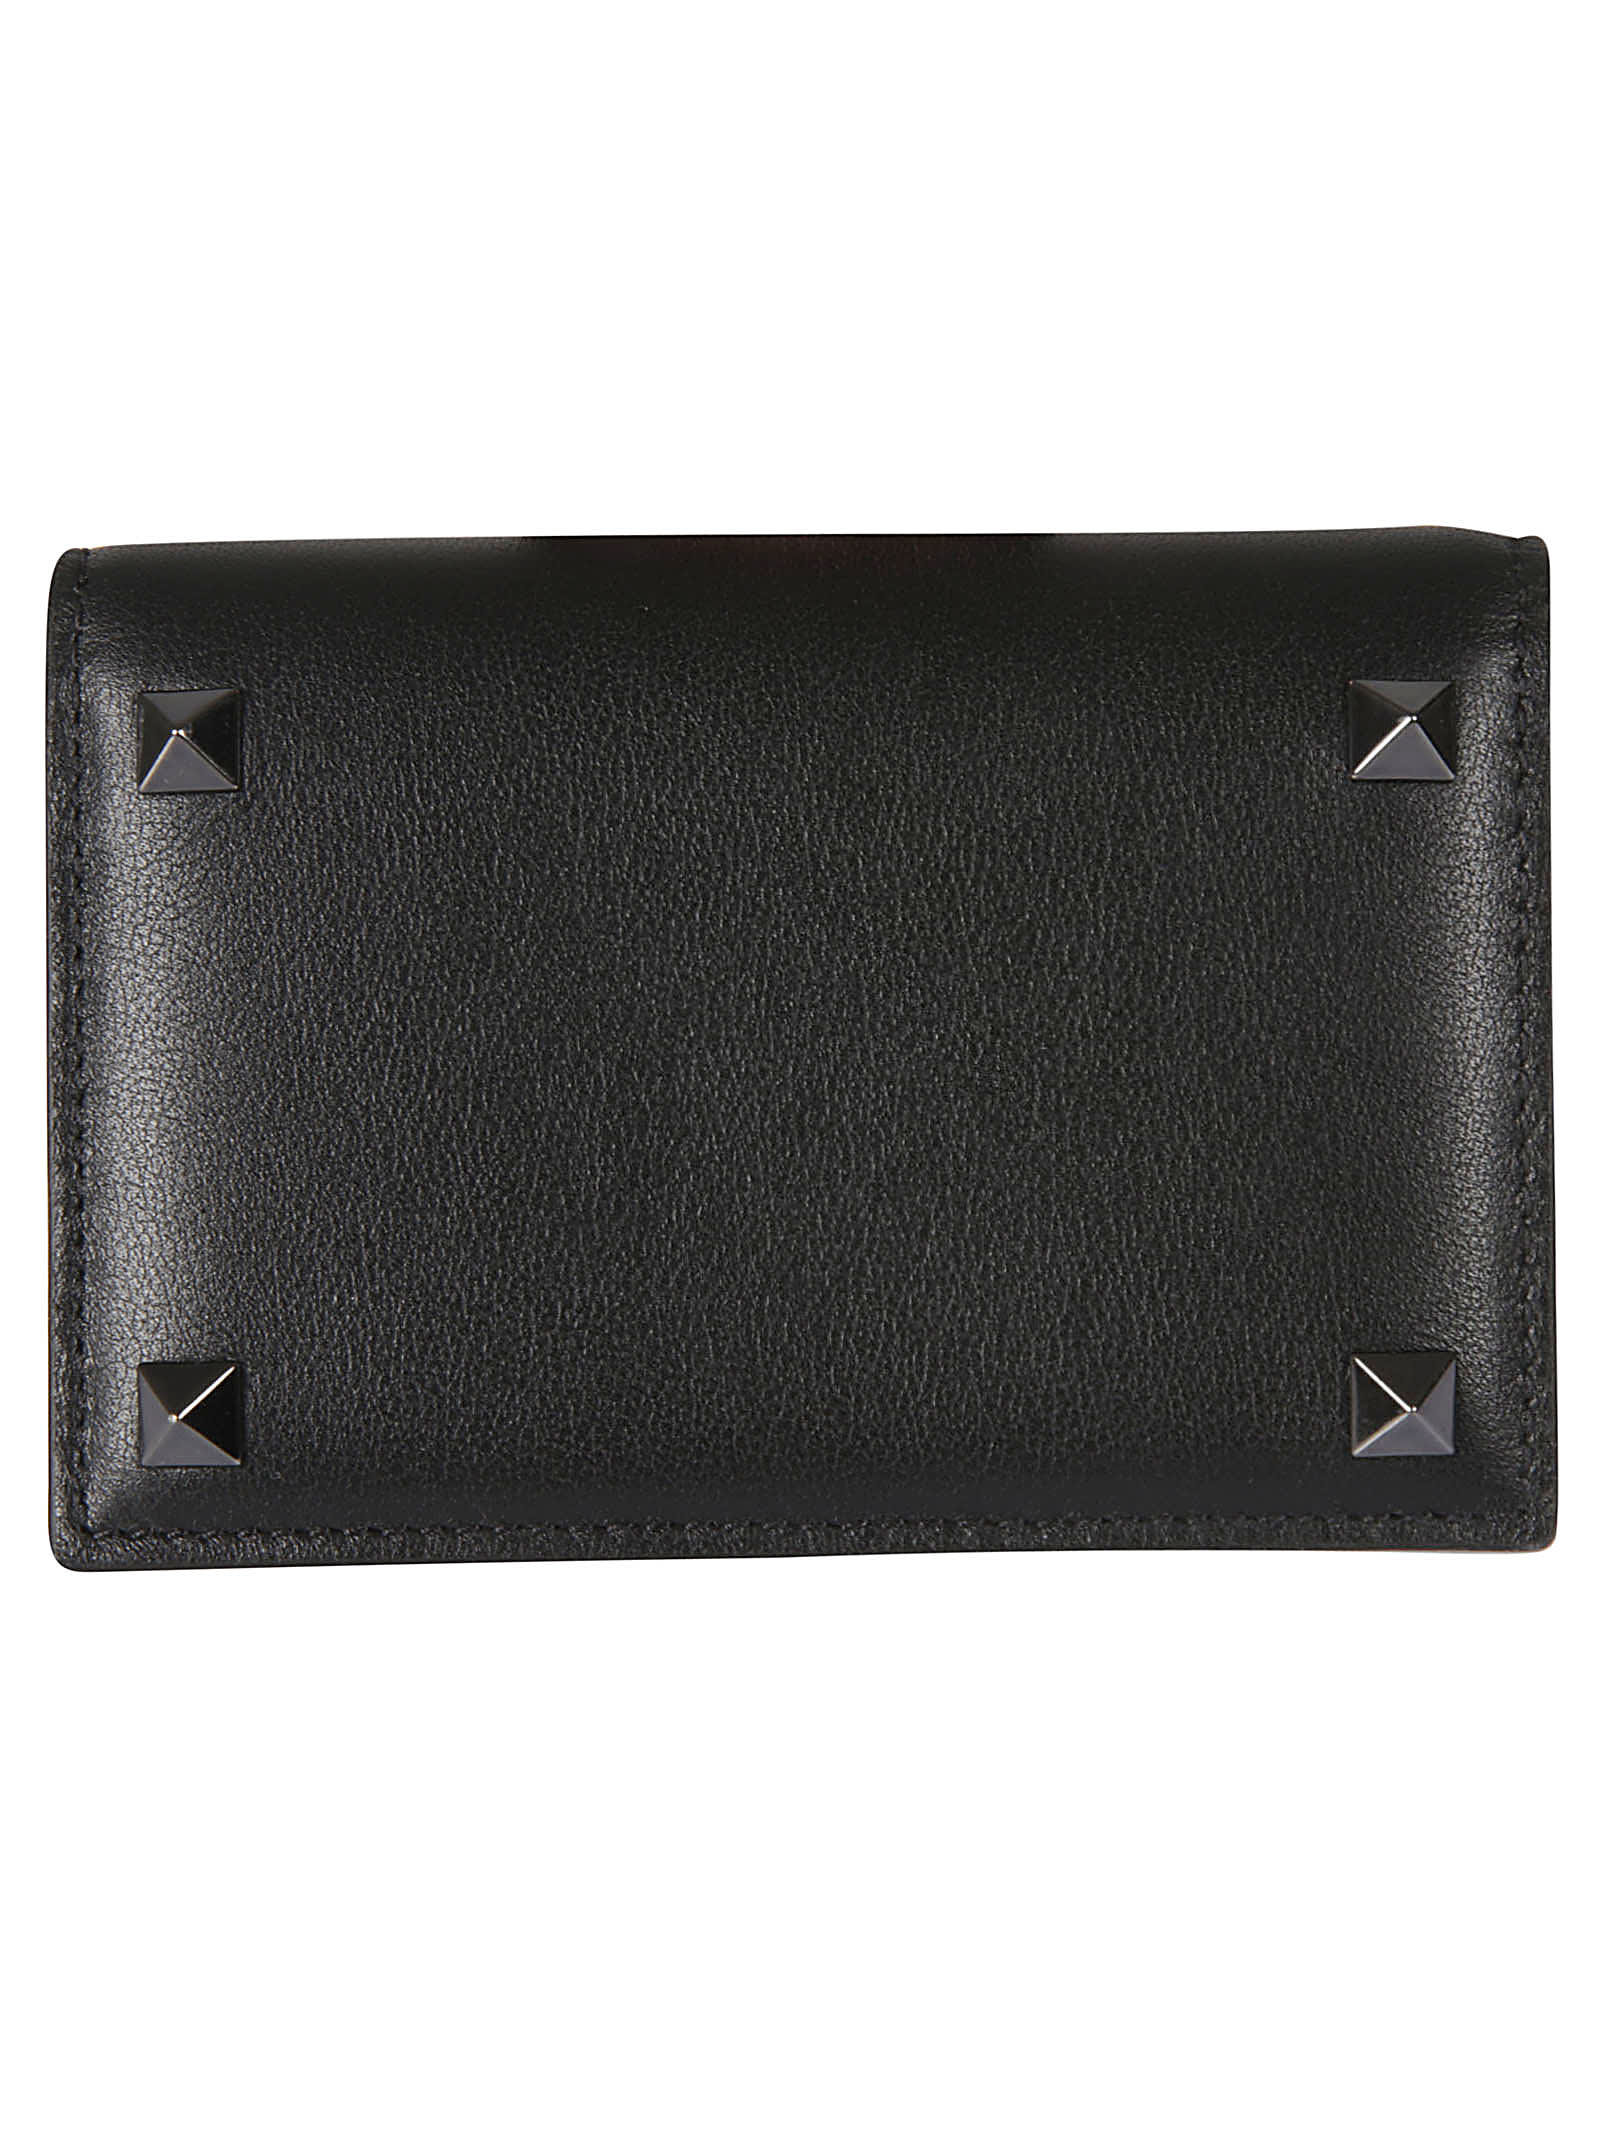 Valentino Garavani Rockstud Folded Card Holder In Black